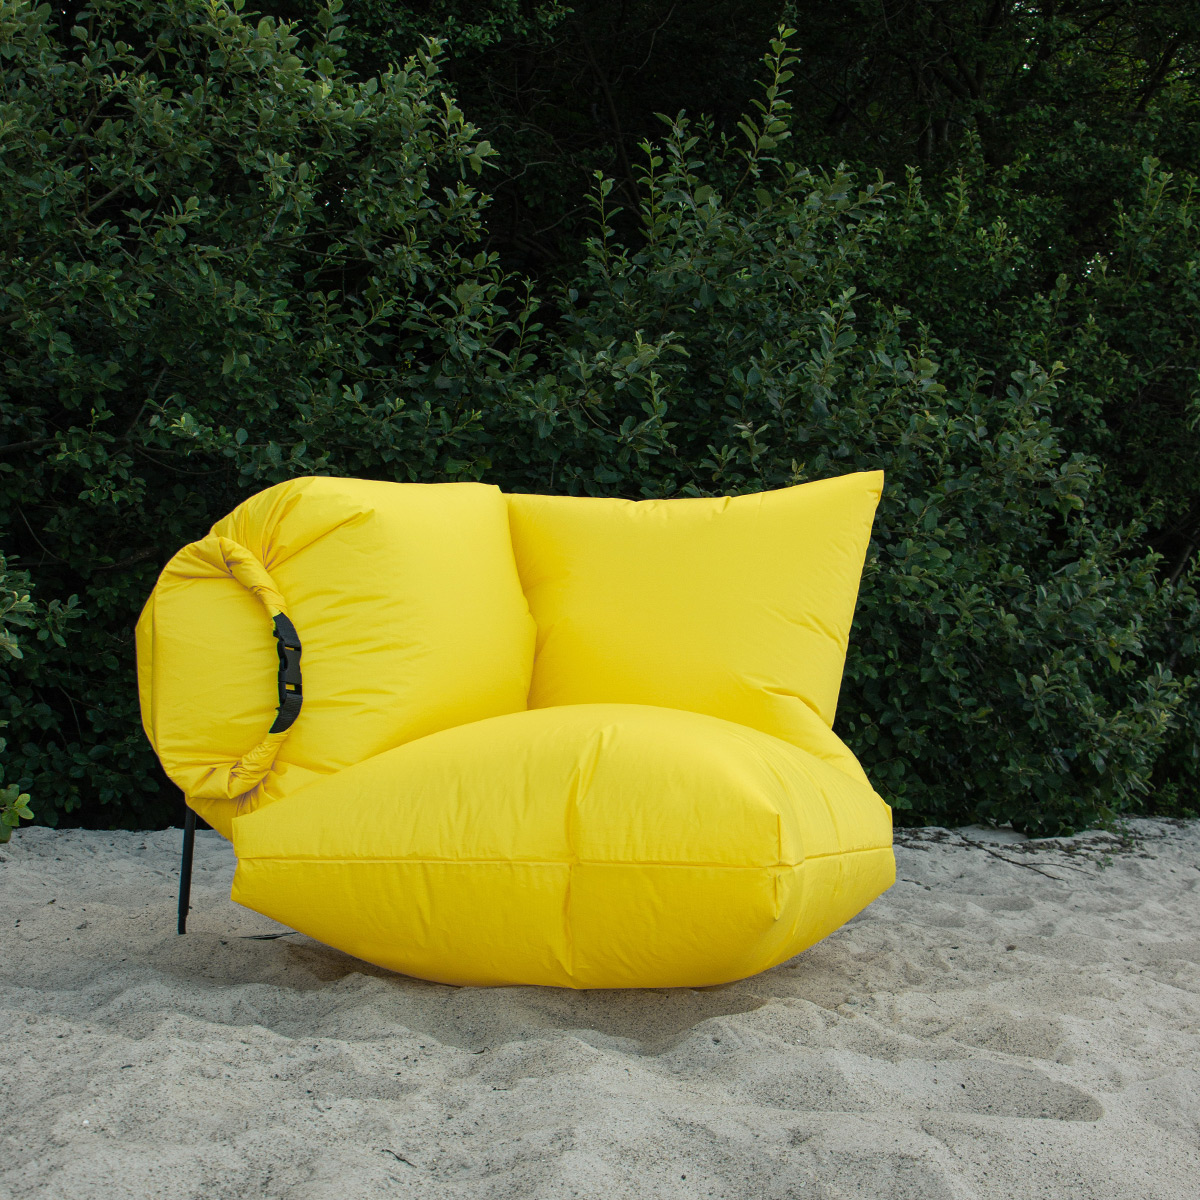 wind sac - inflatable beach chair design